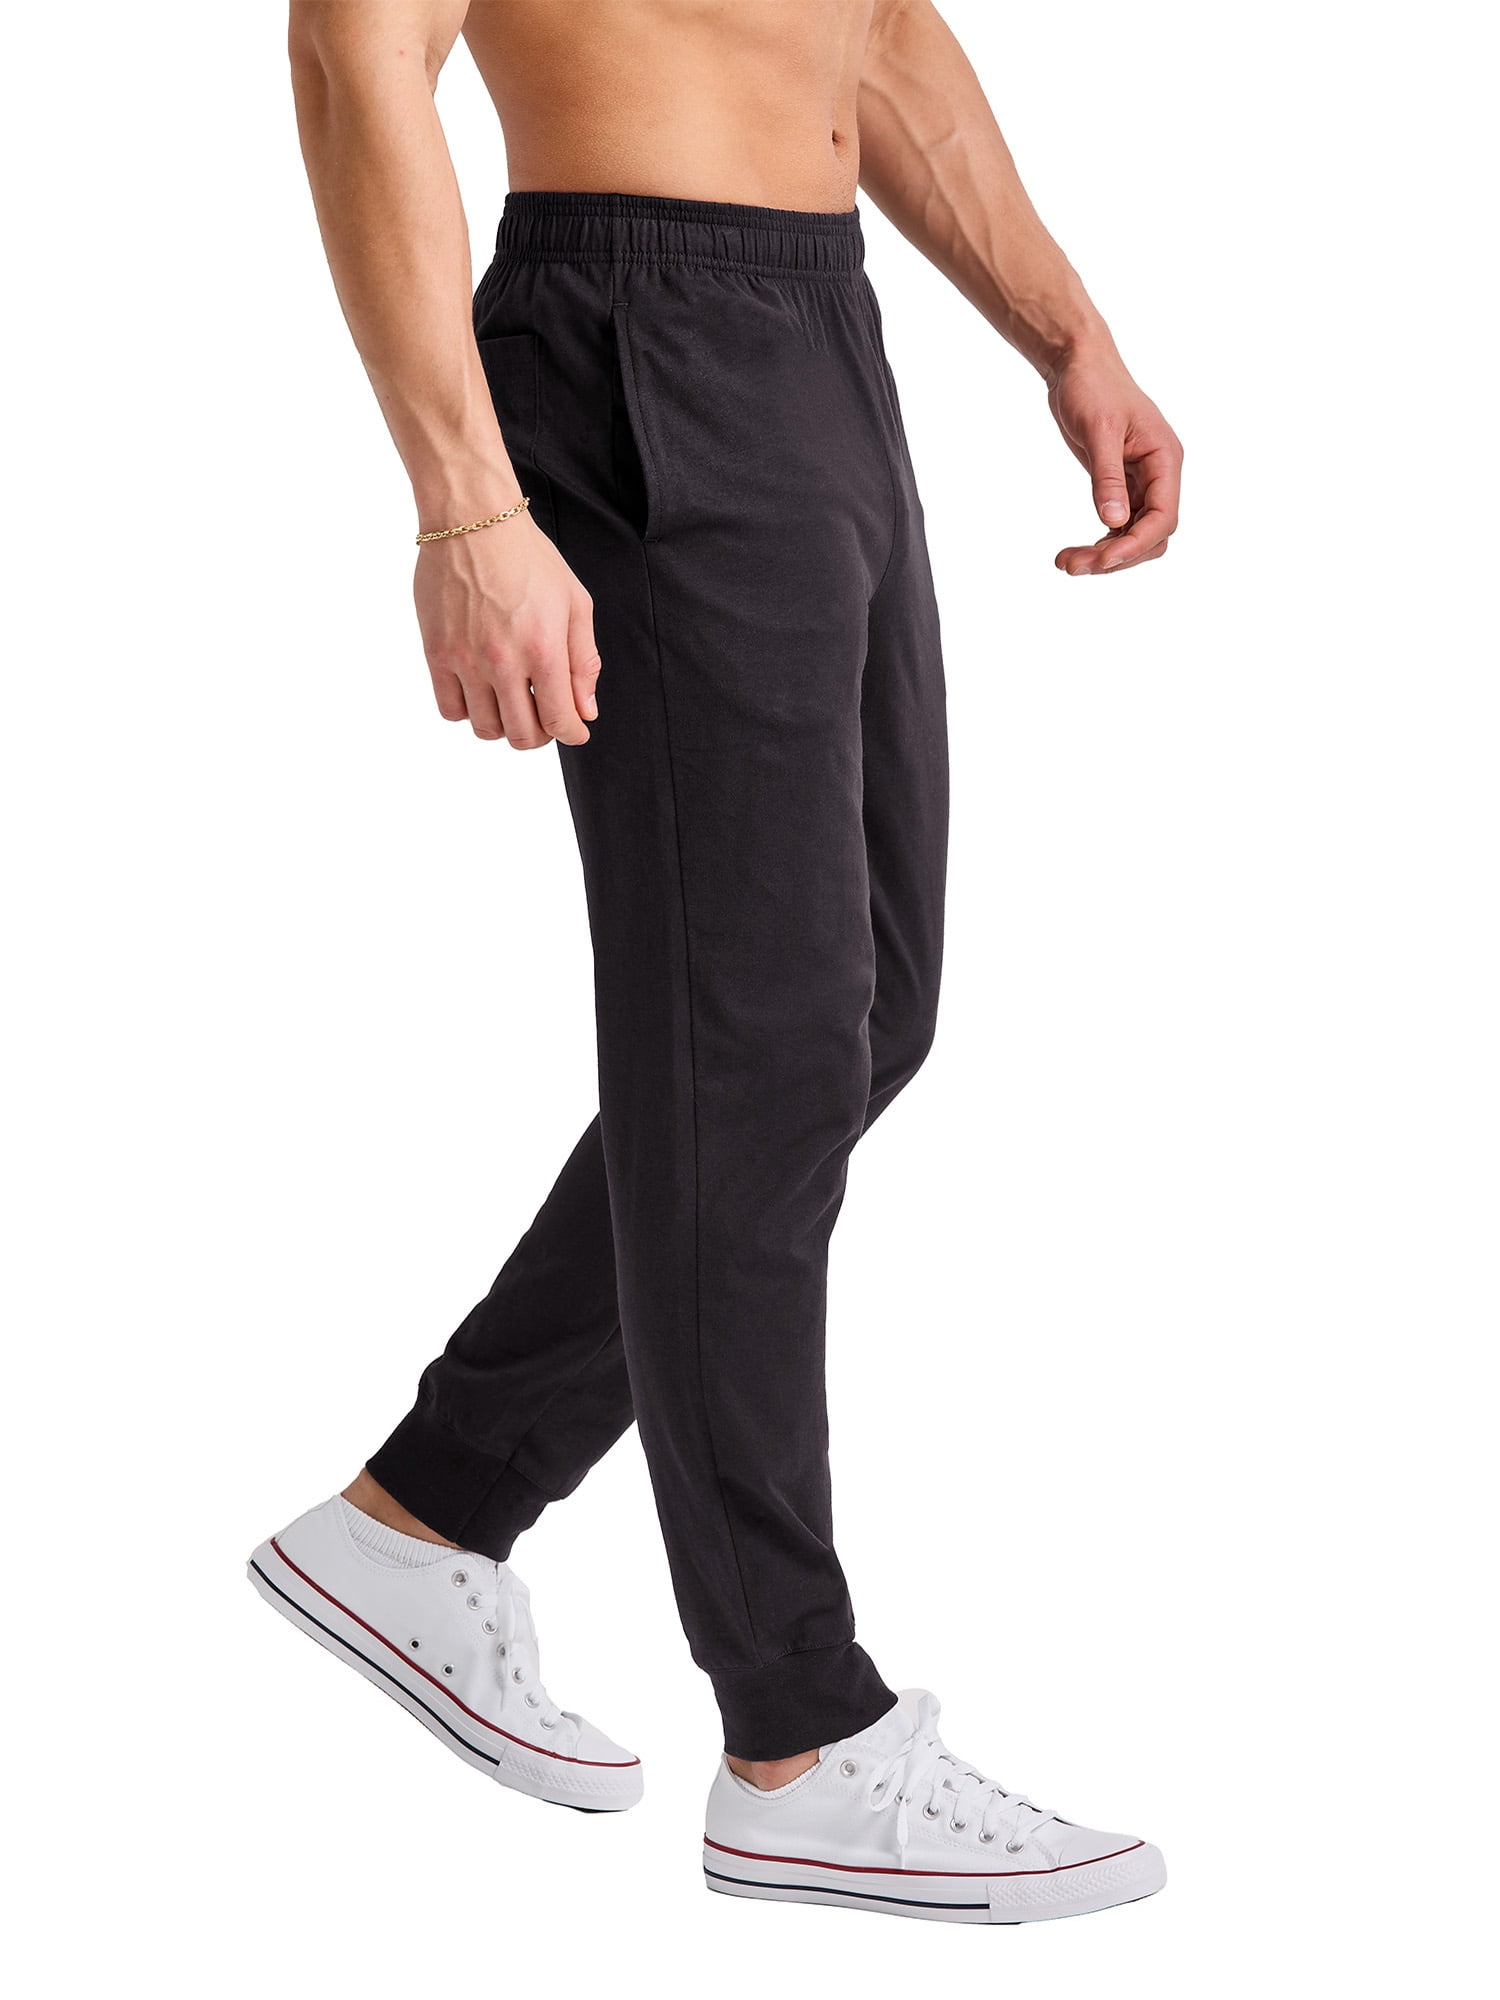 Hanes Originals Men's Cotton Joggers with Pockets, 30.5 Black 2XL